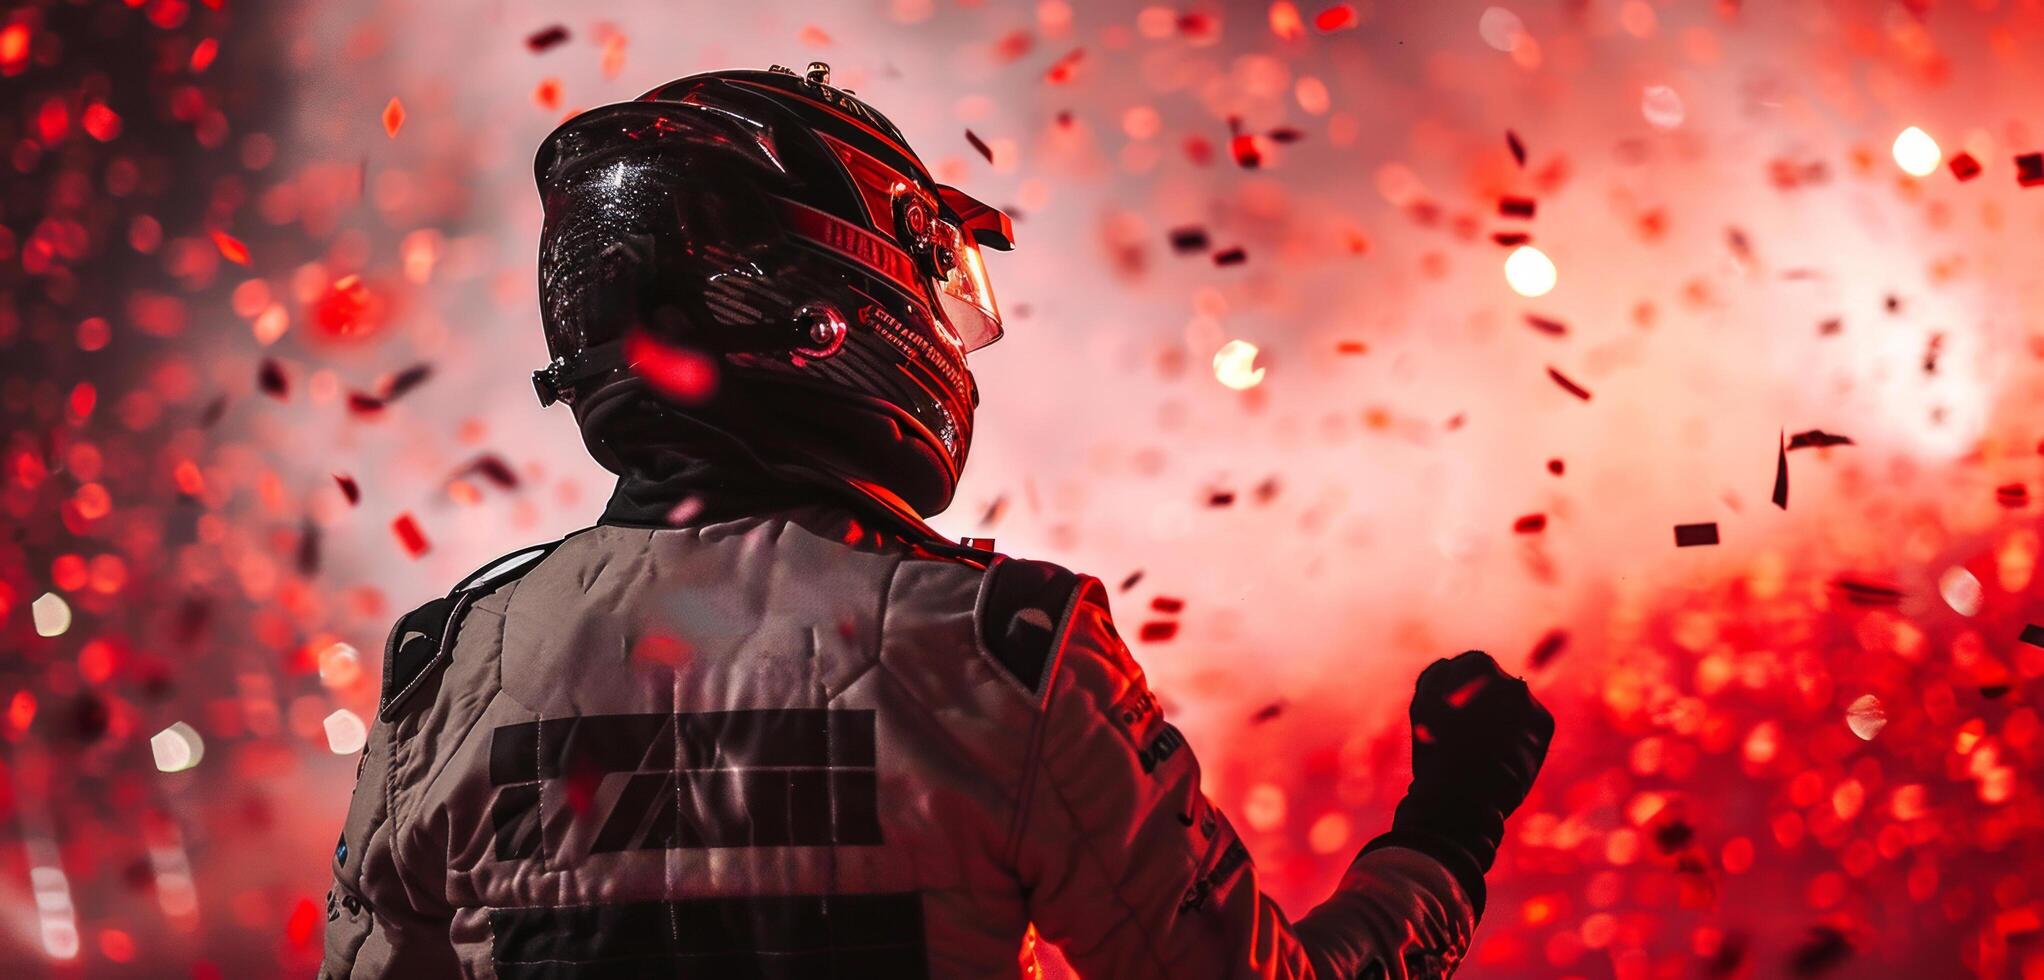 AI generated a race car driver celebrates confetti on a podium photo